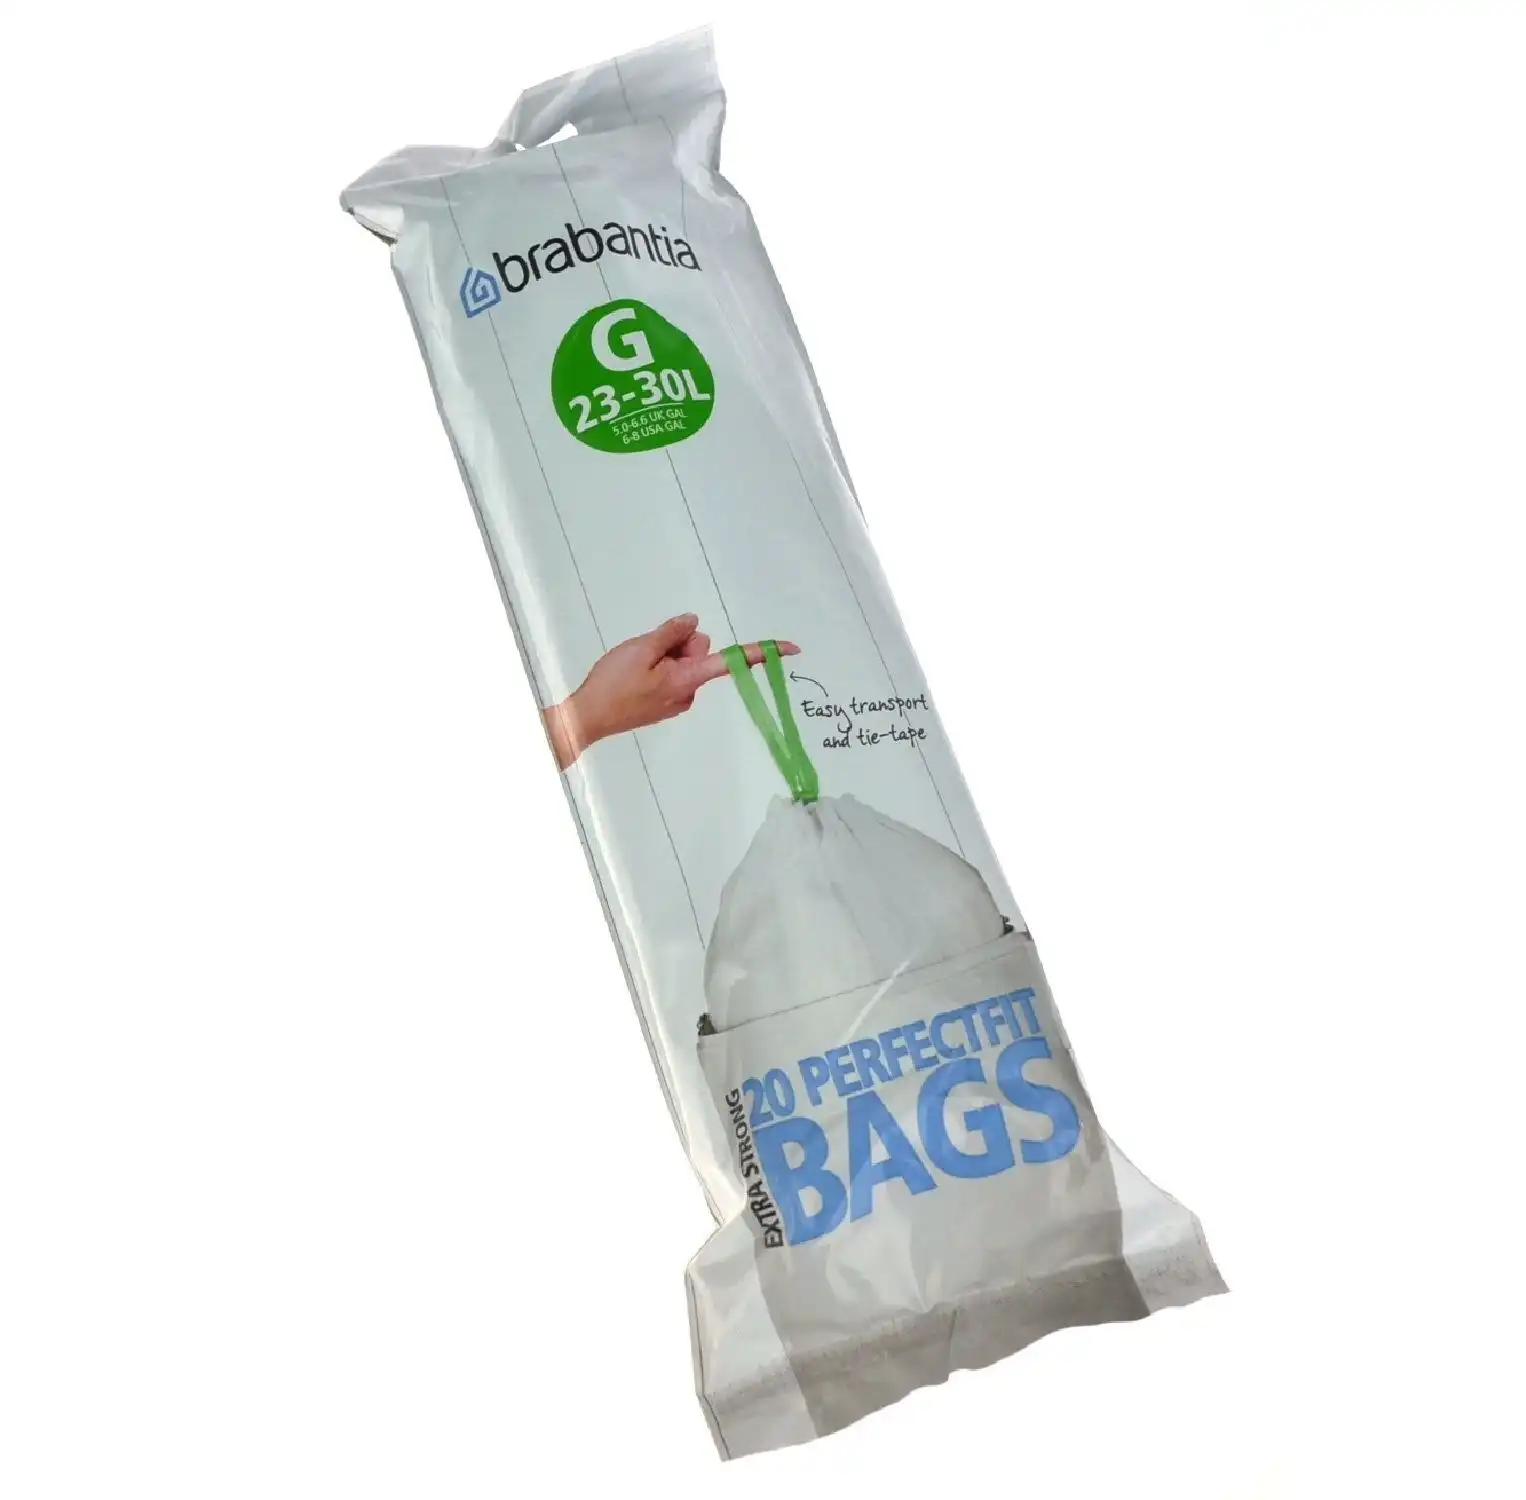 Brabantia Bin Liners G 23   30 Litre   20 Waste Bags